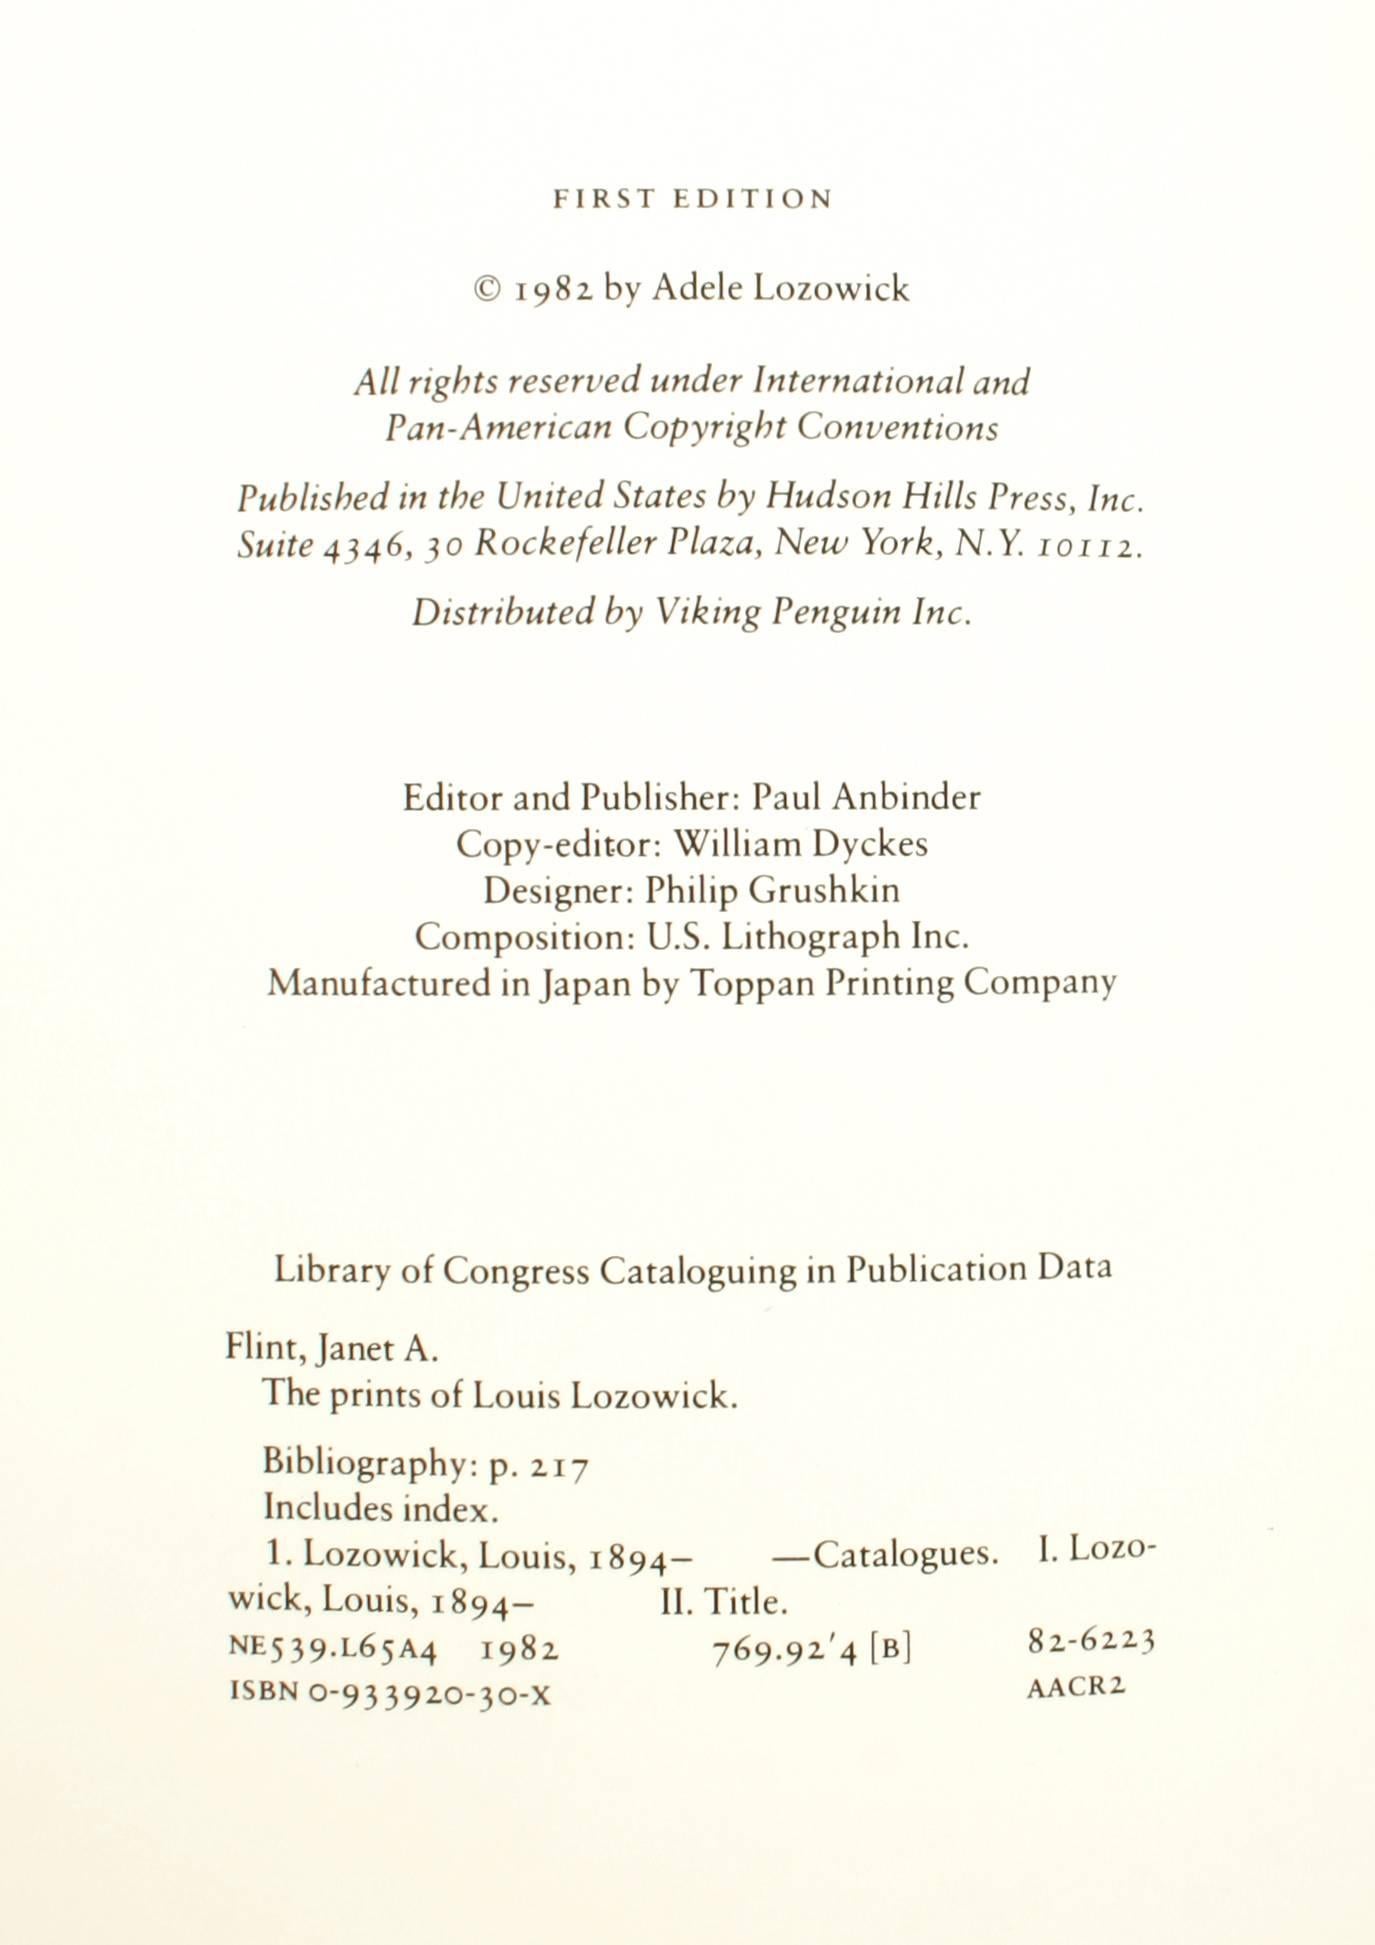 Prints of Louis Lozowick, a Catalogue Raisonne, First Edition 4